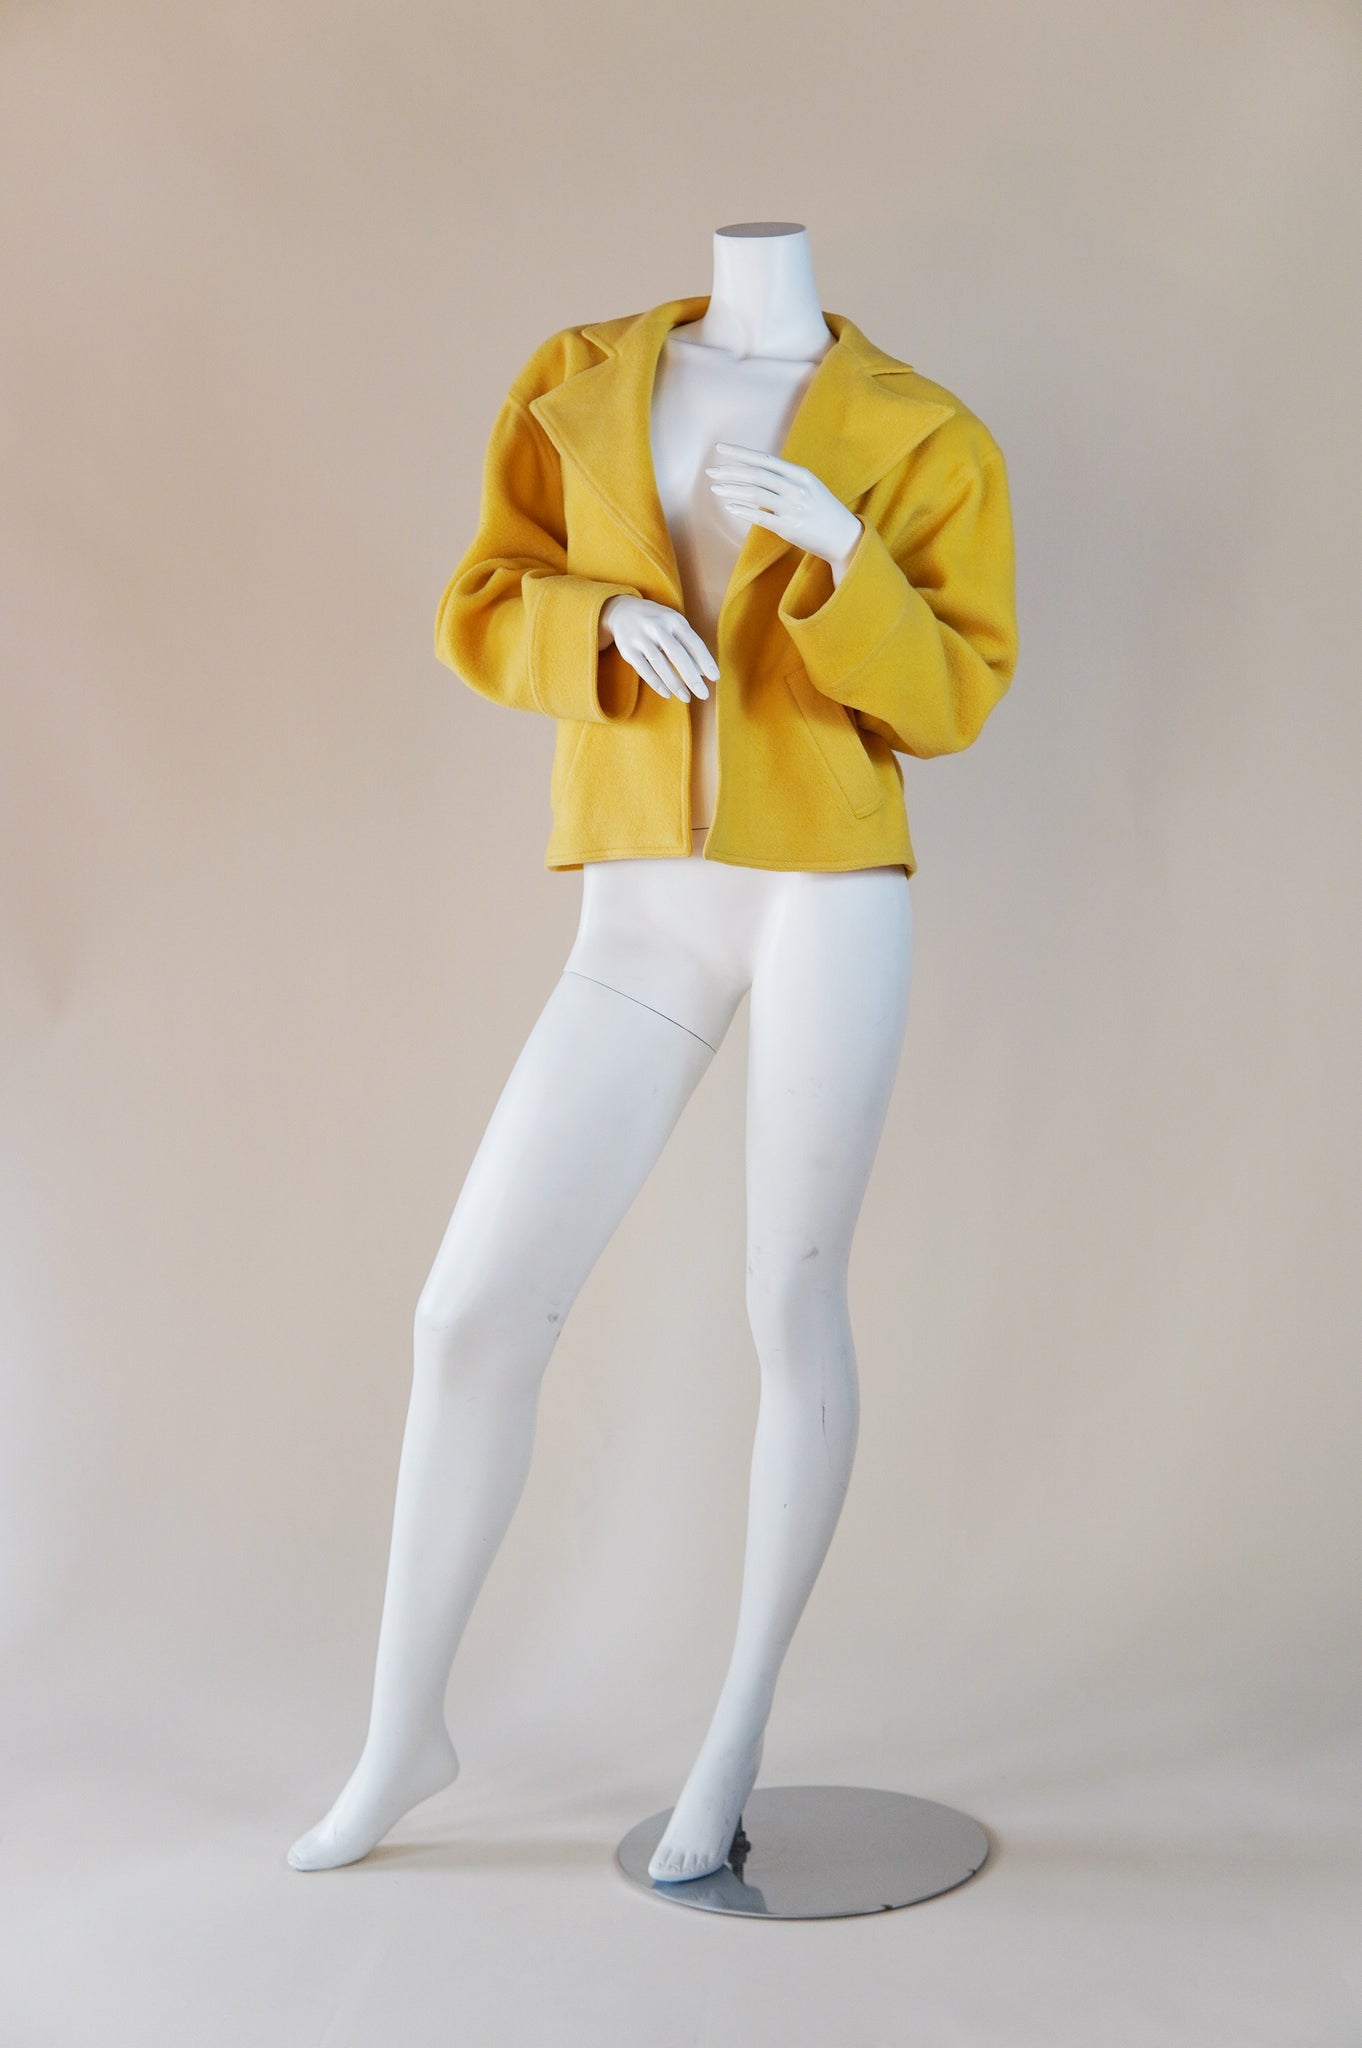 Chloé by Karl Lagerfeld S/S 1982 runway jacket - S/M/L